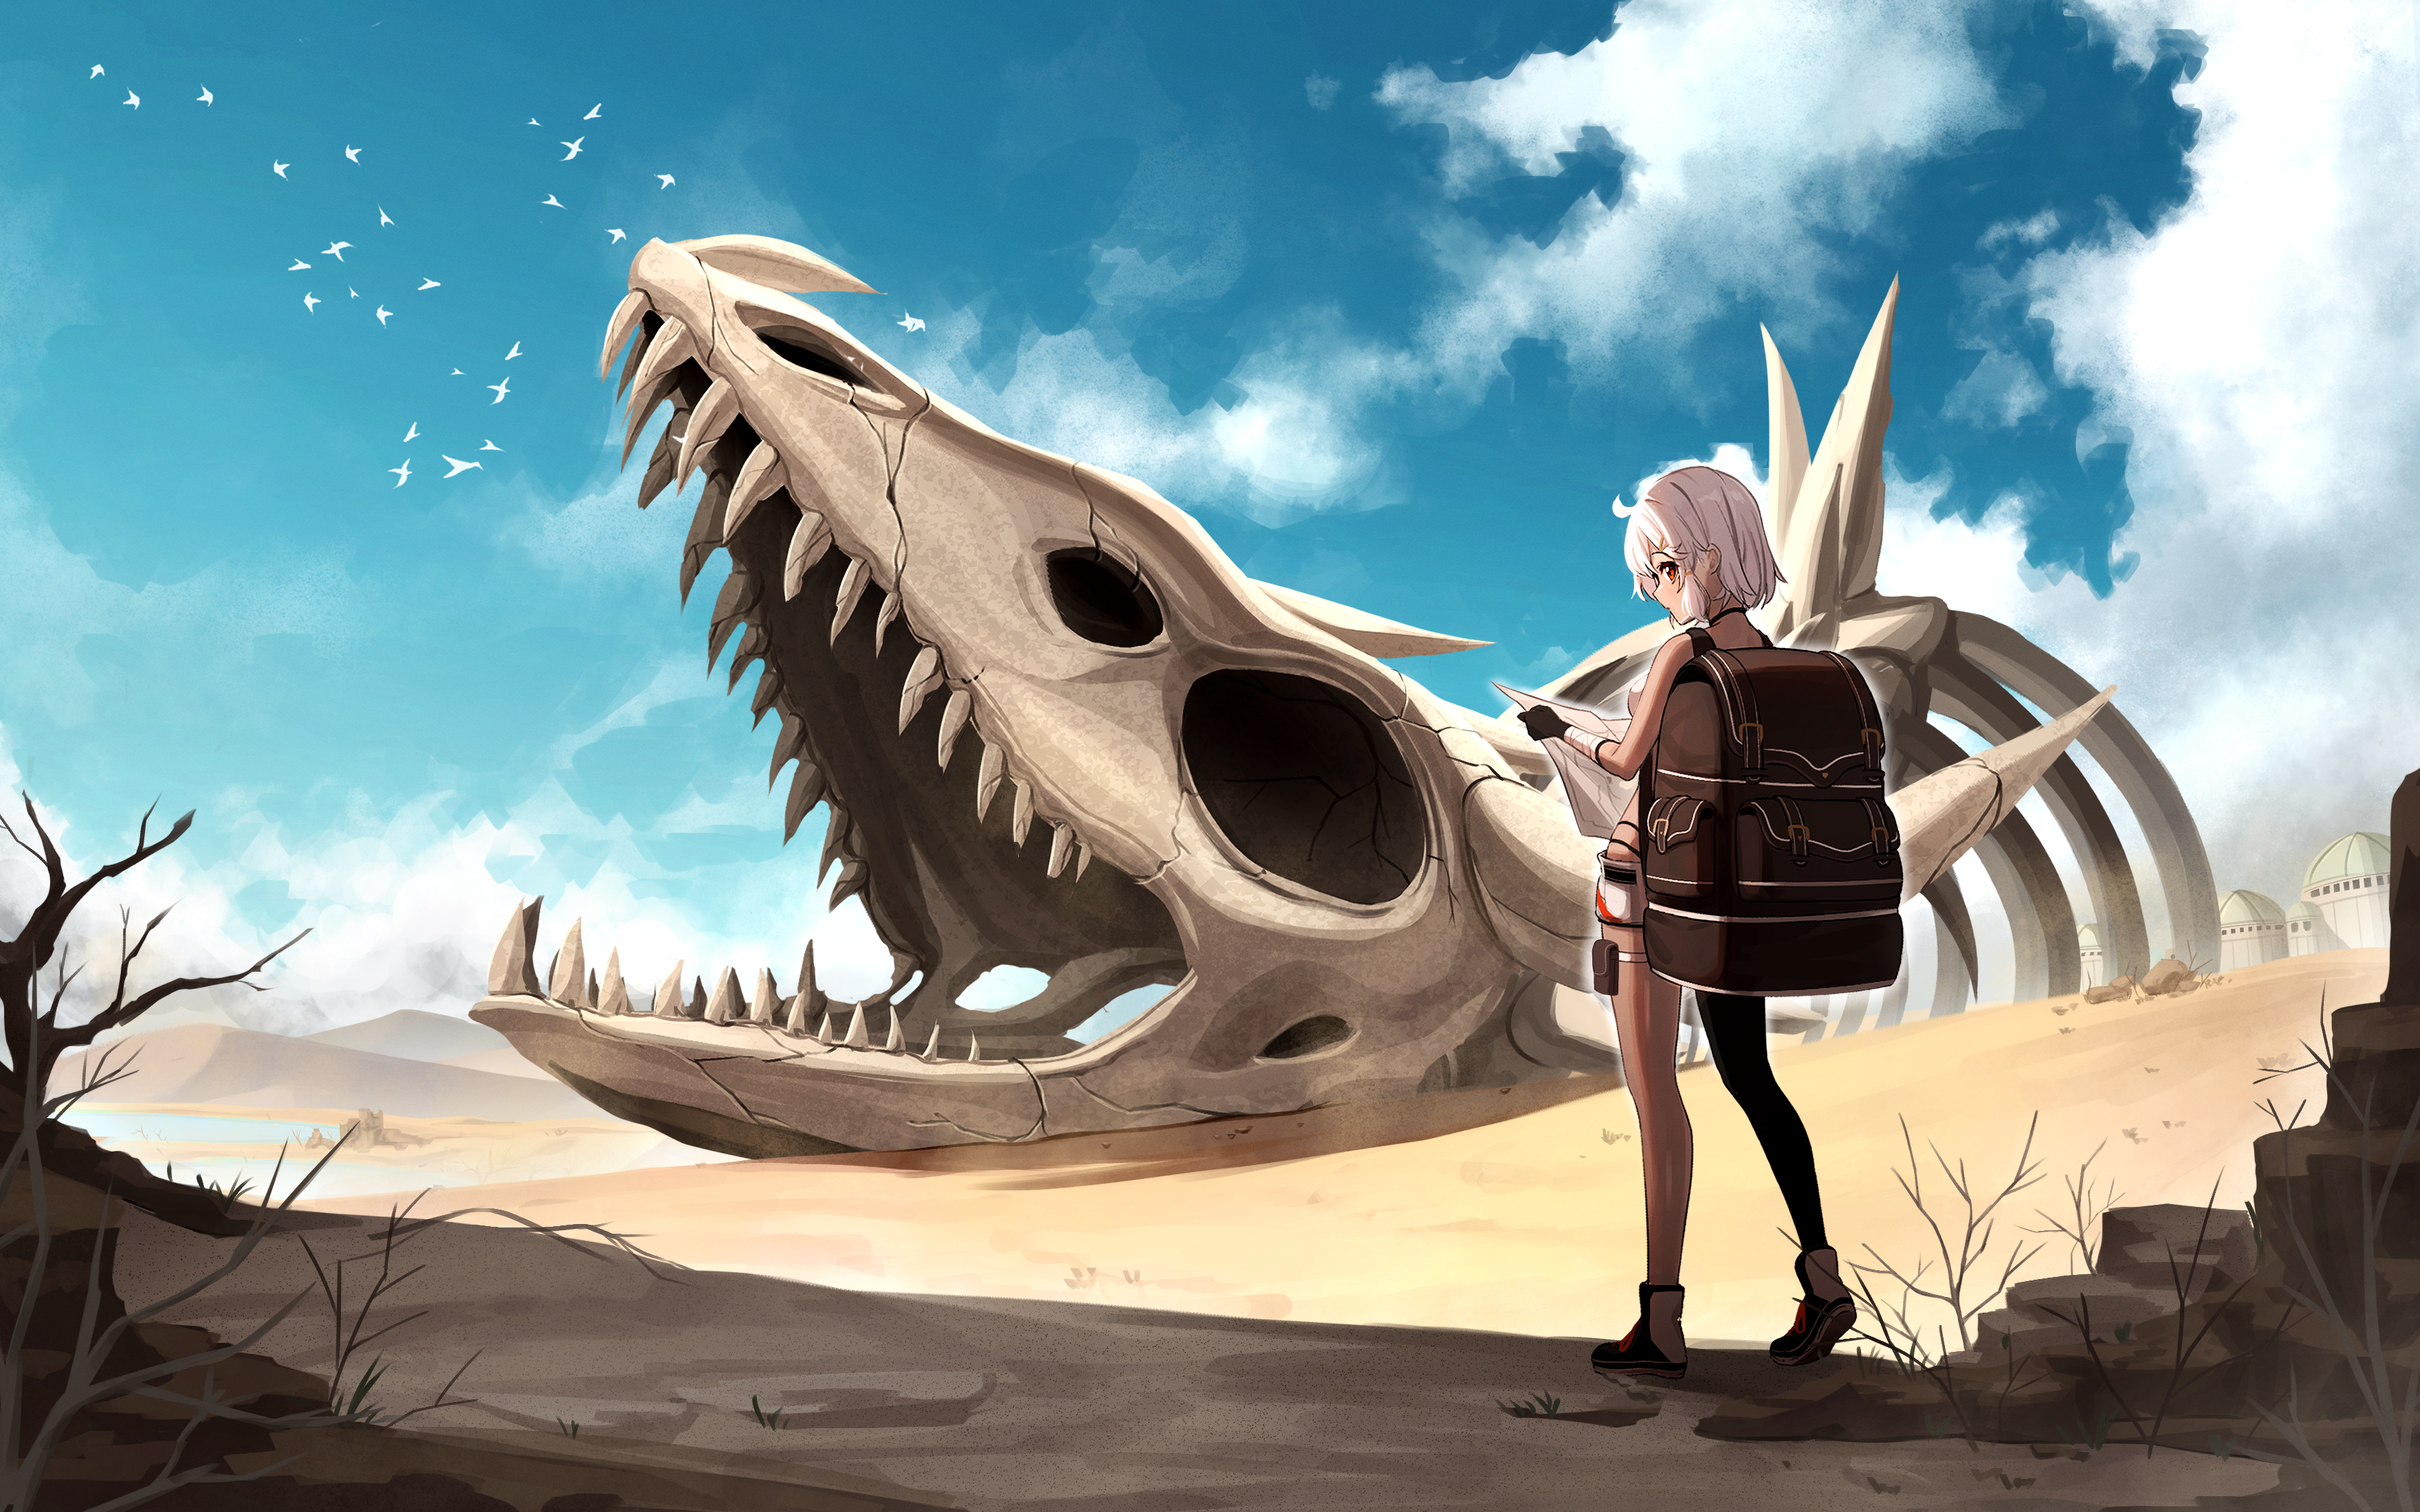 Delusional Desert - A Dreamy Anime Artwork